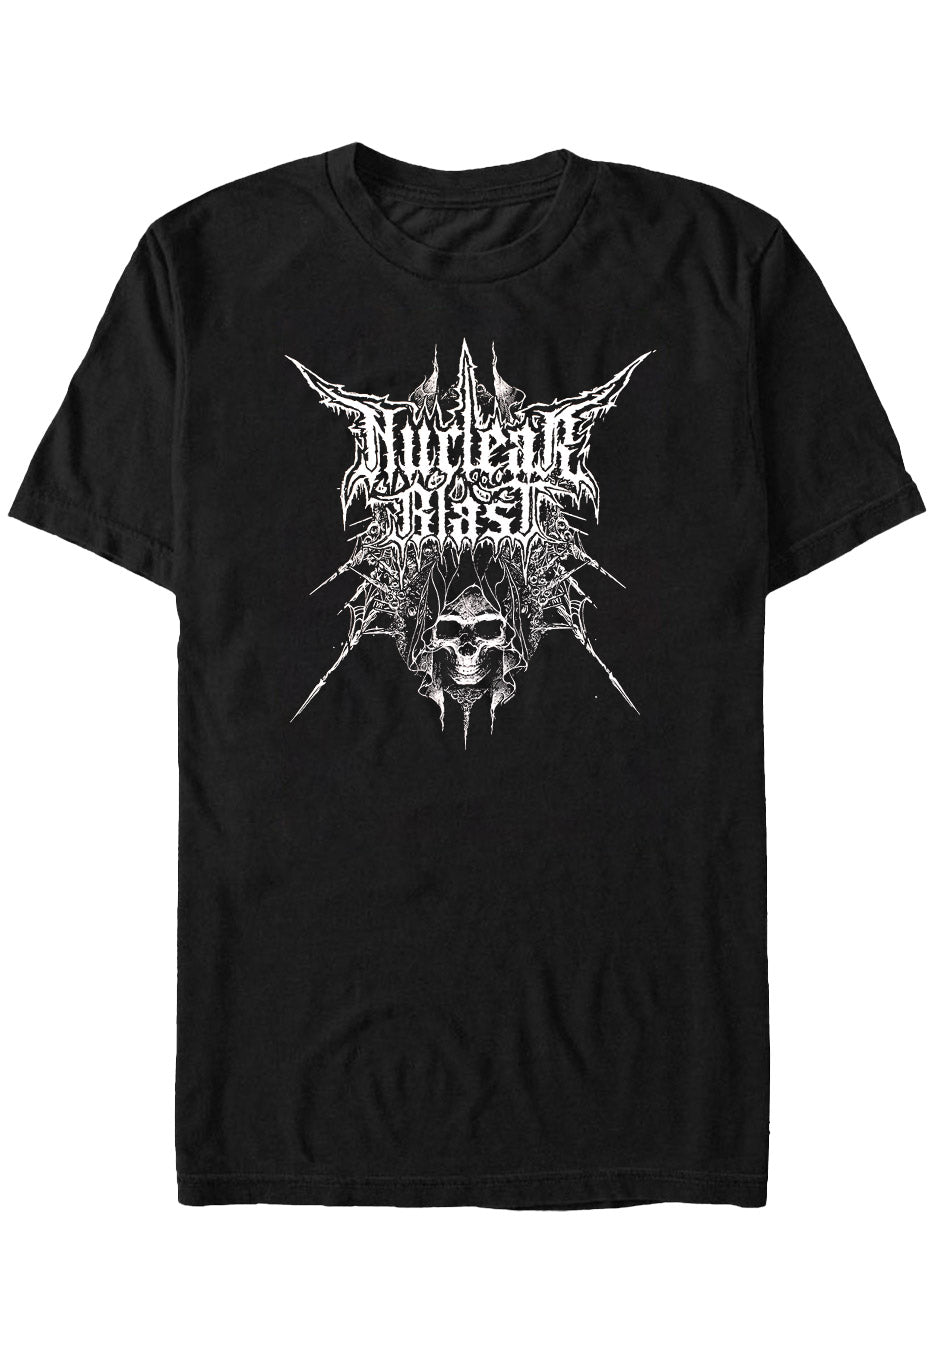 Nuclear Blast Merchandise - Death Metal Skull - T-Shirt